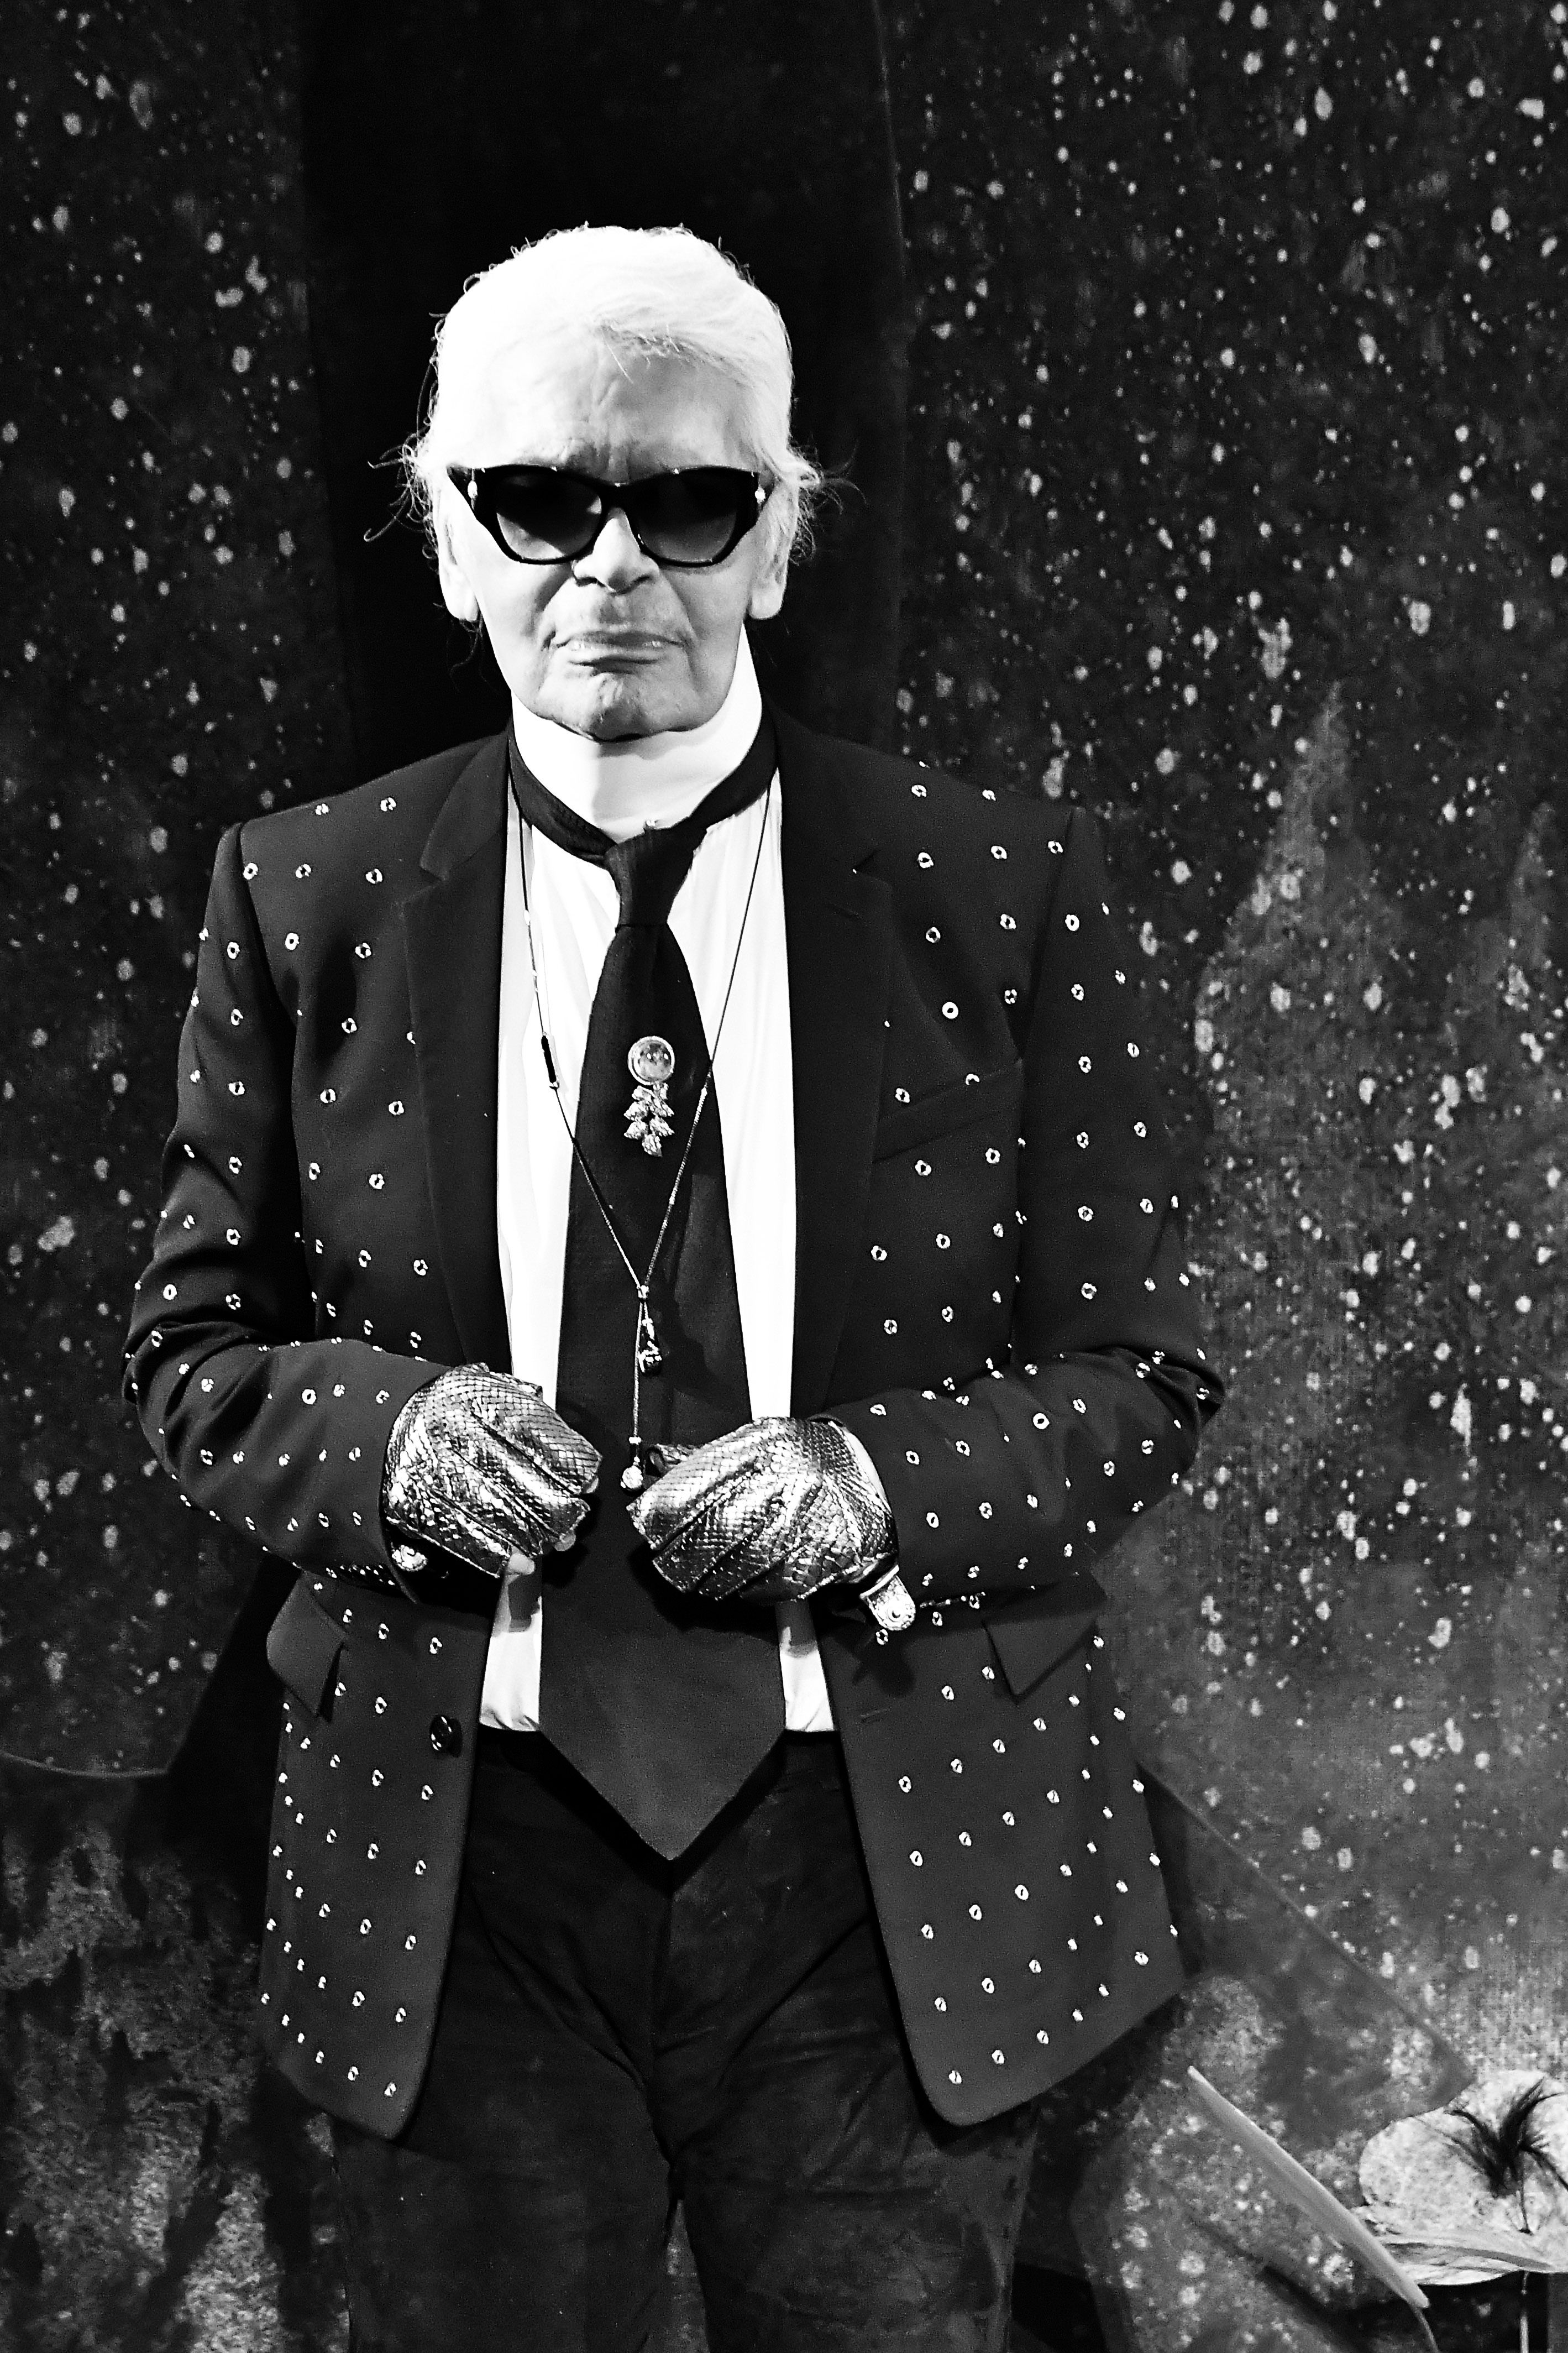 Karl Lagerfeld, Legendary Chanel Designer, Has Died at 85